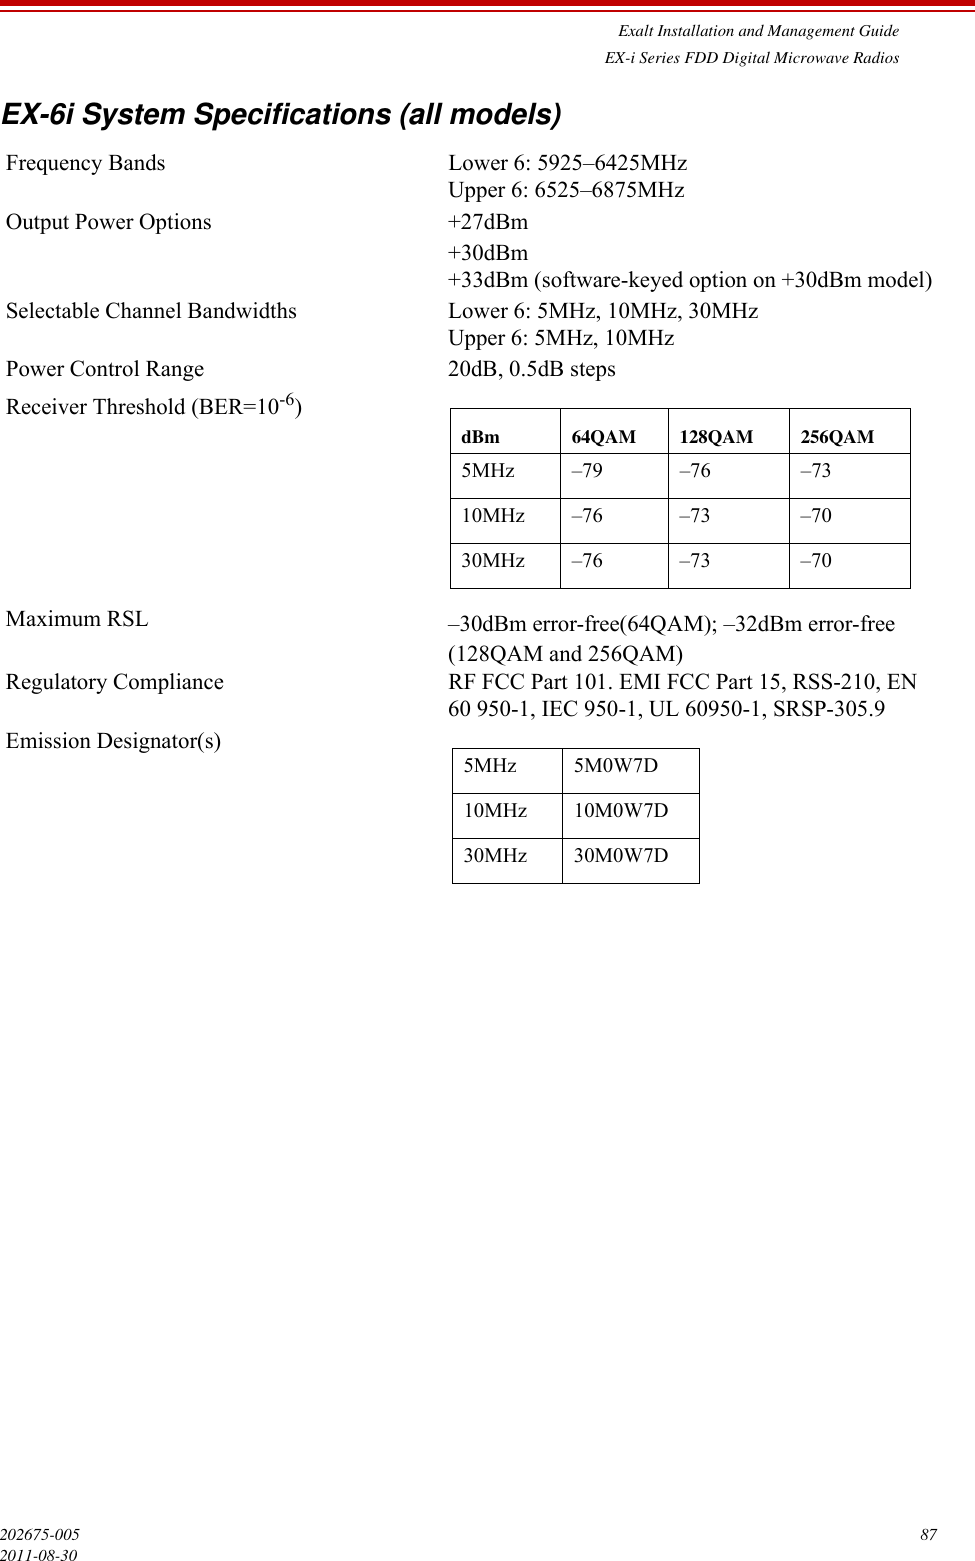 Exalt Installation and Management GuideEX-i Series FDD Digital Microwave Radios202675-005 872011-08-30EX-6i System Specifications (all models)Frequency Bands Lower 6: 5925–6425MHzUpper 6: 6525–6875MHzOutput Power Options +27dBm +30dBm+33dBm (software-keyed option on +30dBm model)Selectable Channel Bandwidths Lower 6: 5MHz, 10MHz, 30MHzUpper 6: 5MHz, 10MHzPower Control Range  20dB, 0.5dB stepsReceiver Threshold (BER=10-6)Maximum RSL –30dBm error-free(64QAM); –32dBm error-free (128QAM and 256QAM)Regulatory Compliance RF FCC Part 101. EMI FCC Part 15, RSS-210, EN 60 950-1, IEC 950-1, UL 60950-1, SRSP-305.9Emission Designator(s)dBm 64QAM 128QAM 256QAM5MHz –79 –76 –7310MHz –76 –73 –7030MHz –76 –73 –705MHz 5M0W7D10MHz 10M0W7D30MHz 30M0W7D